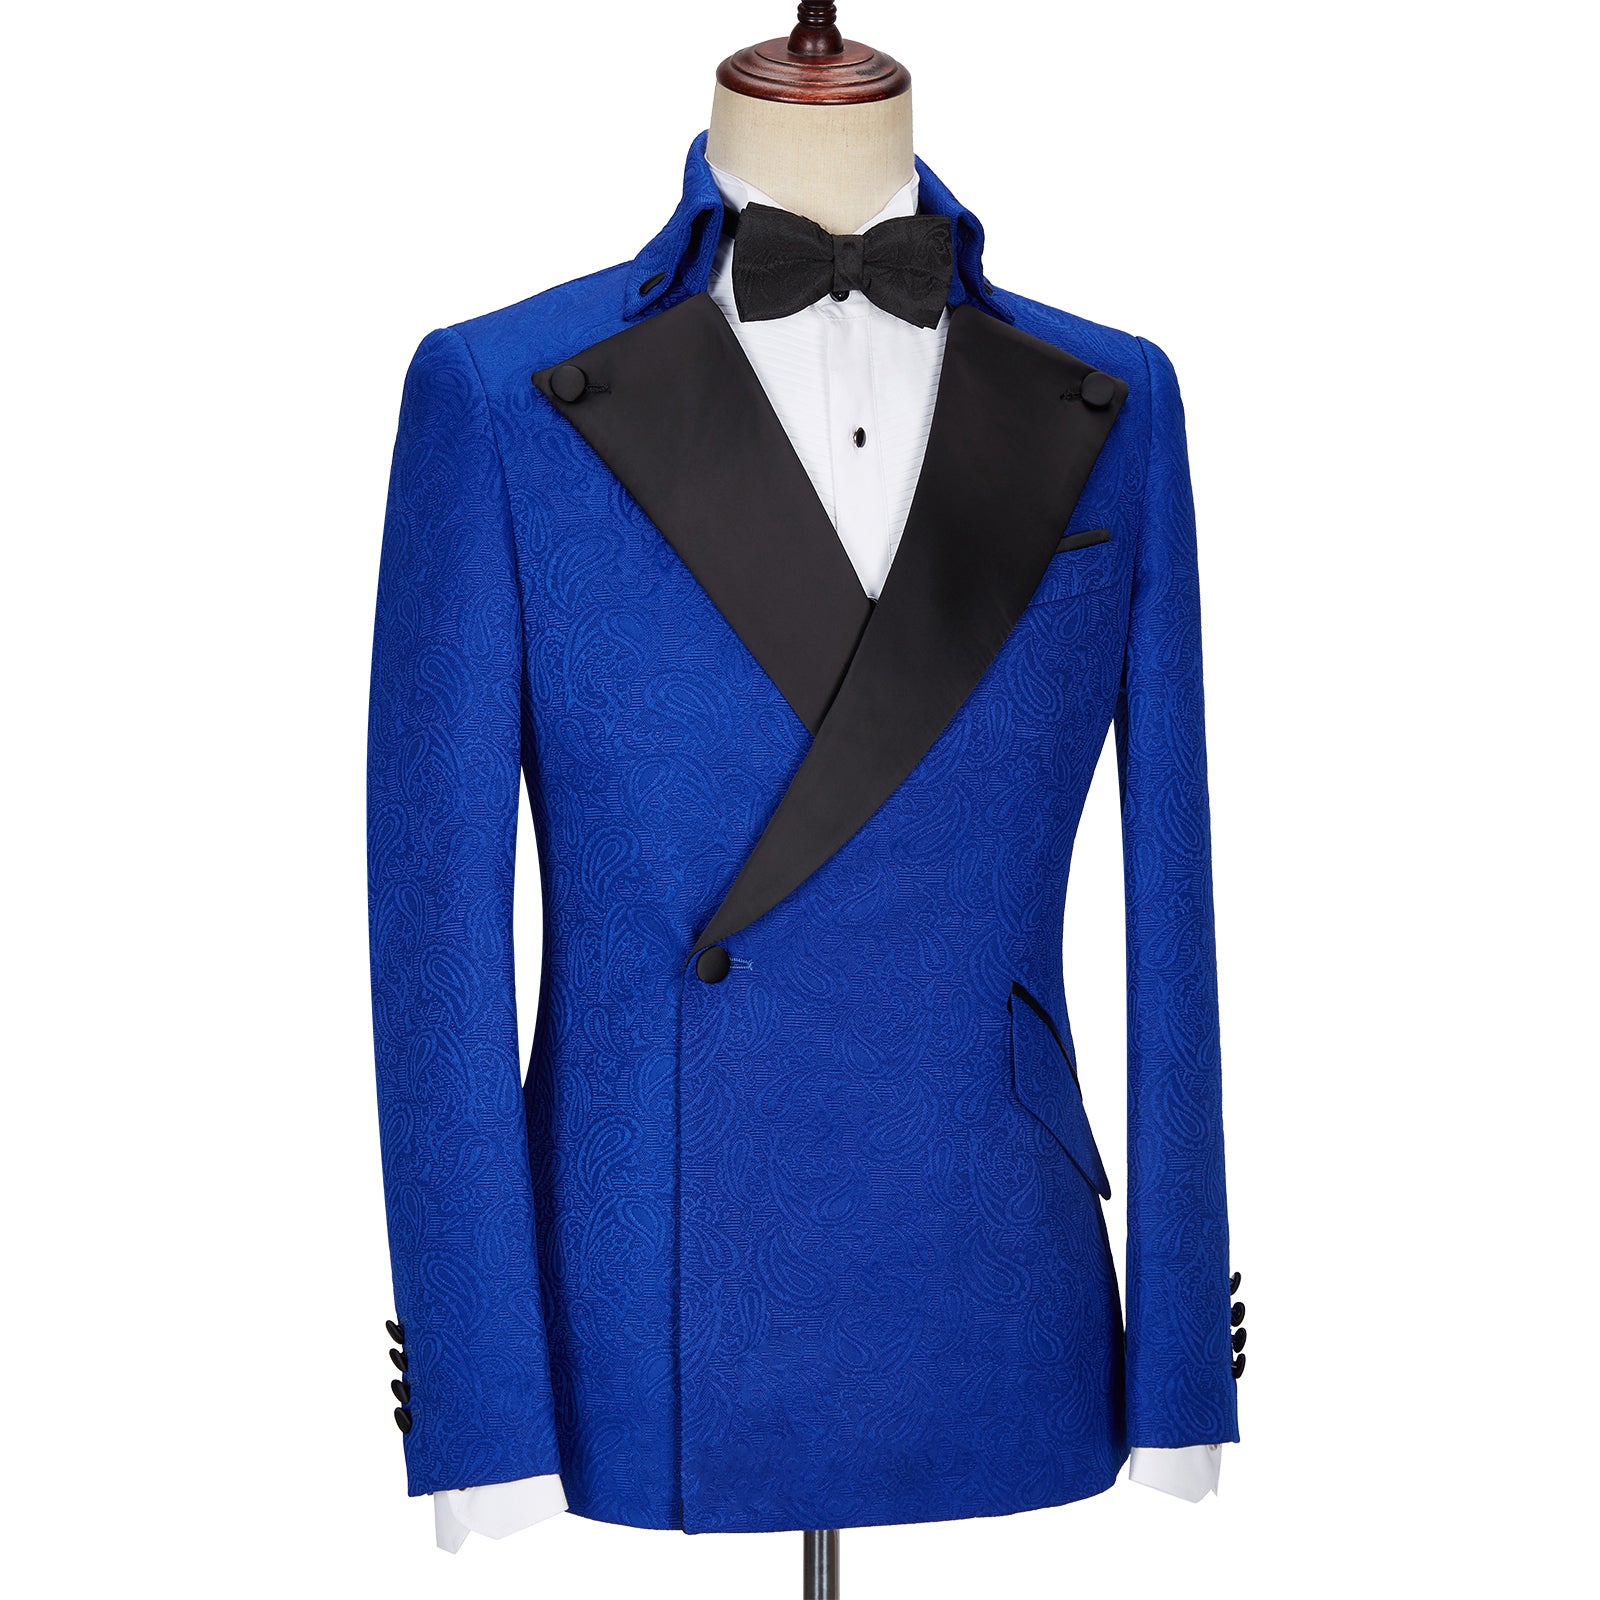 Royal Blue Jacquard Wedding Suits with Black Lapel - Dean Fashion New Arrival